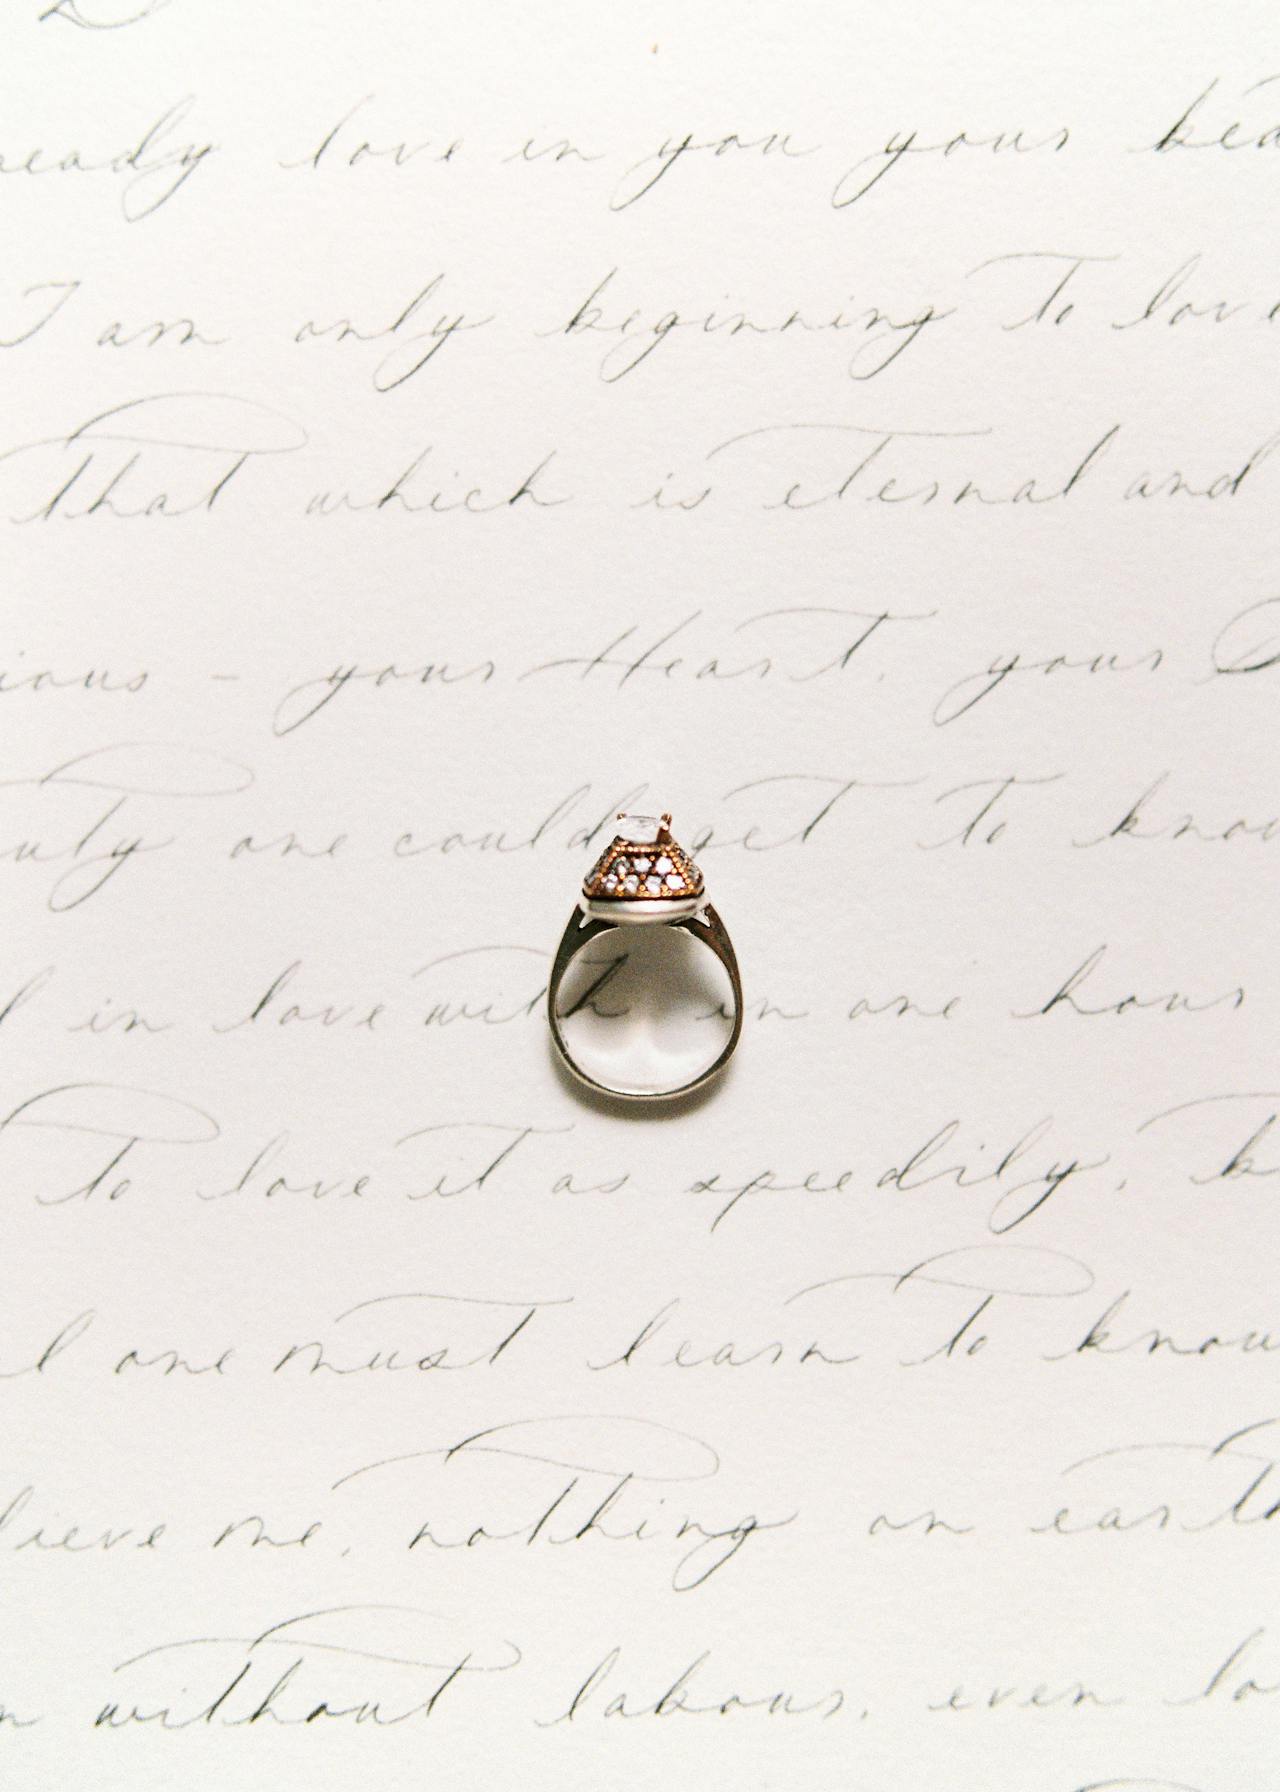 vintage engagement rings